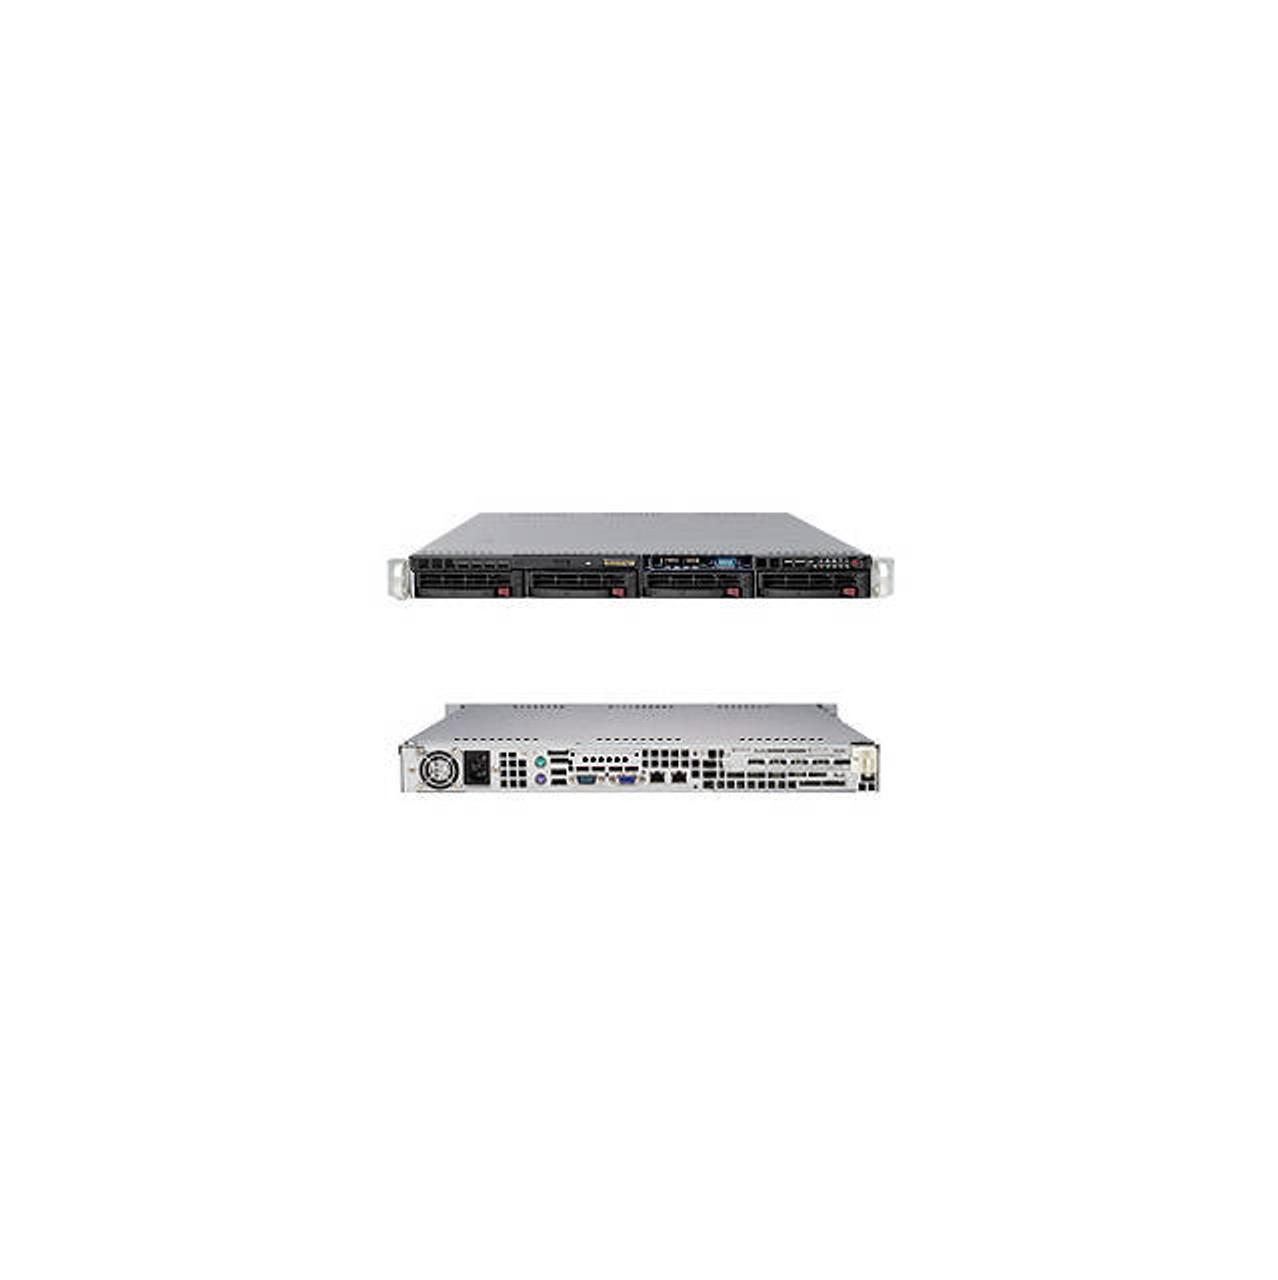 Supermicro SuperServer SYS-5016I-MT LGA1156 280W 1U Rackmount Server Barebone System (Black)